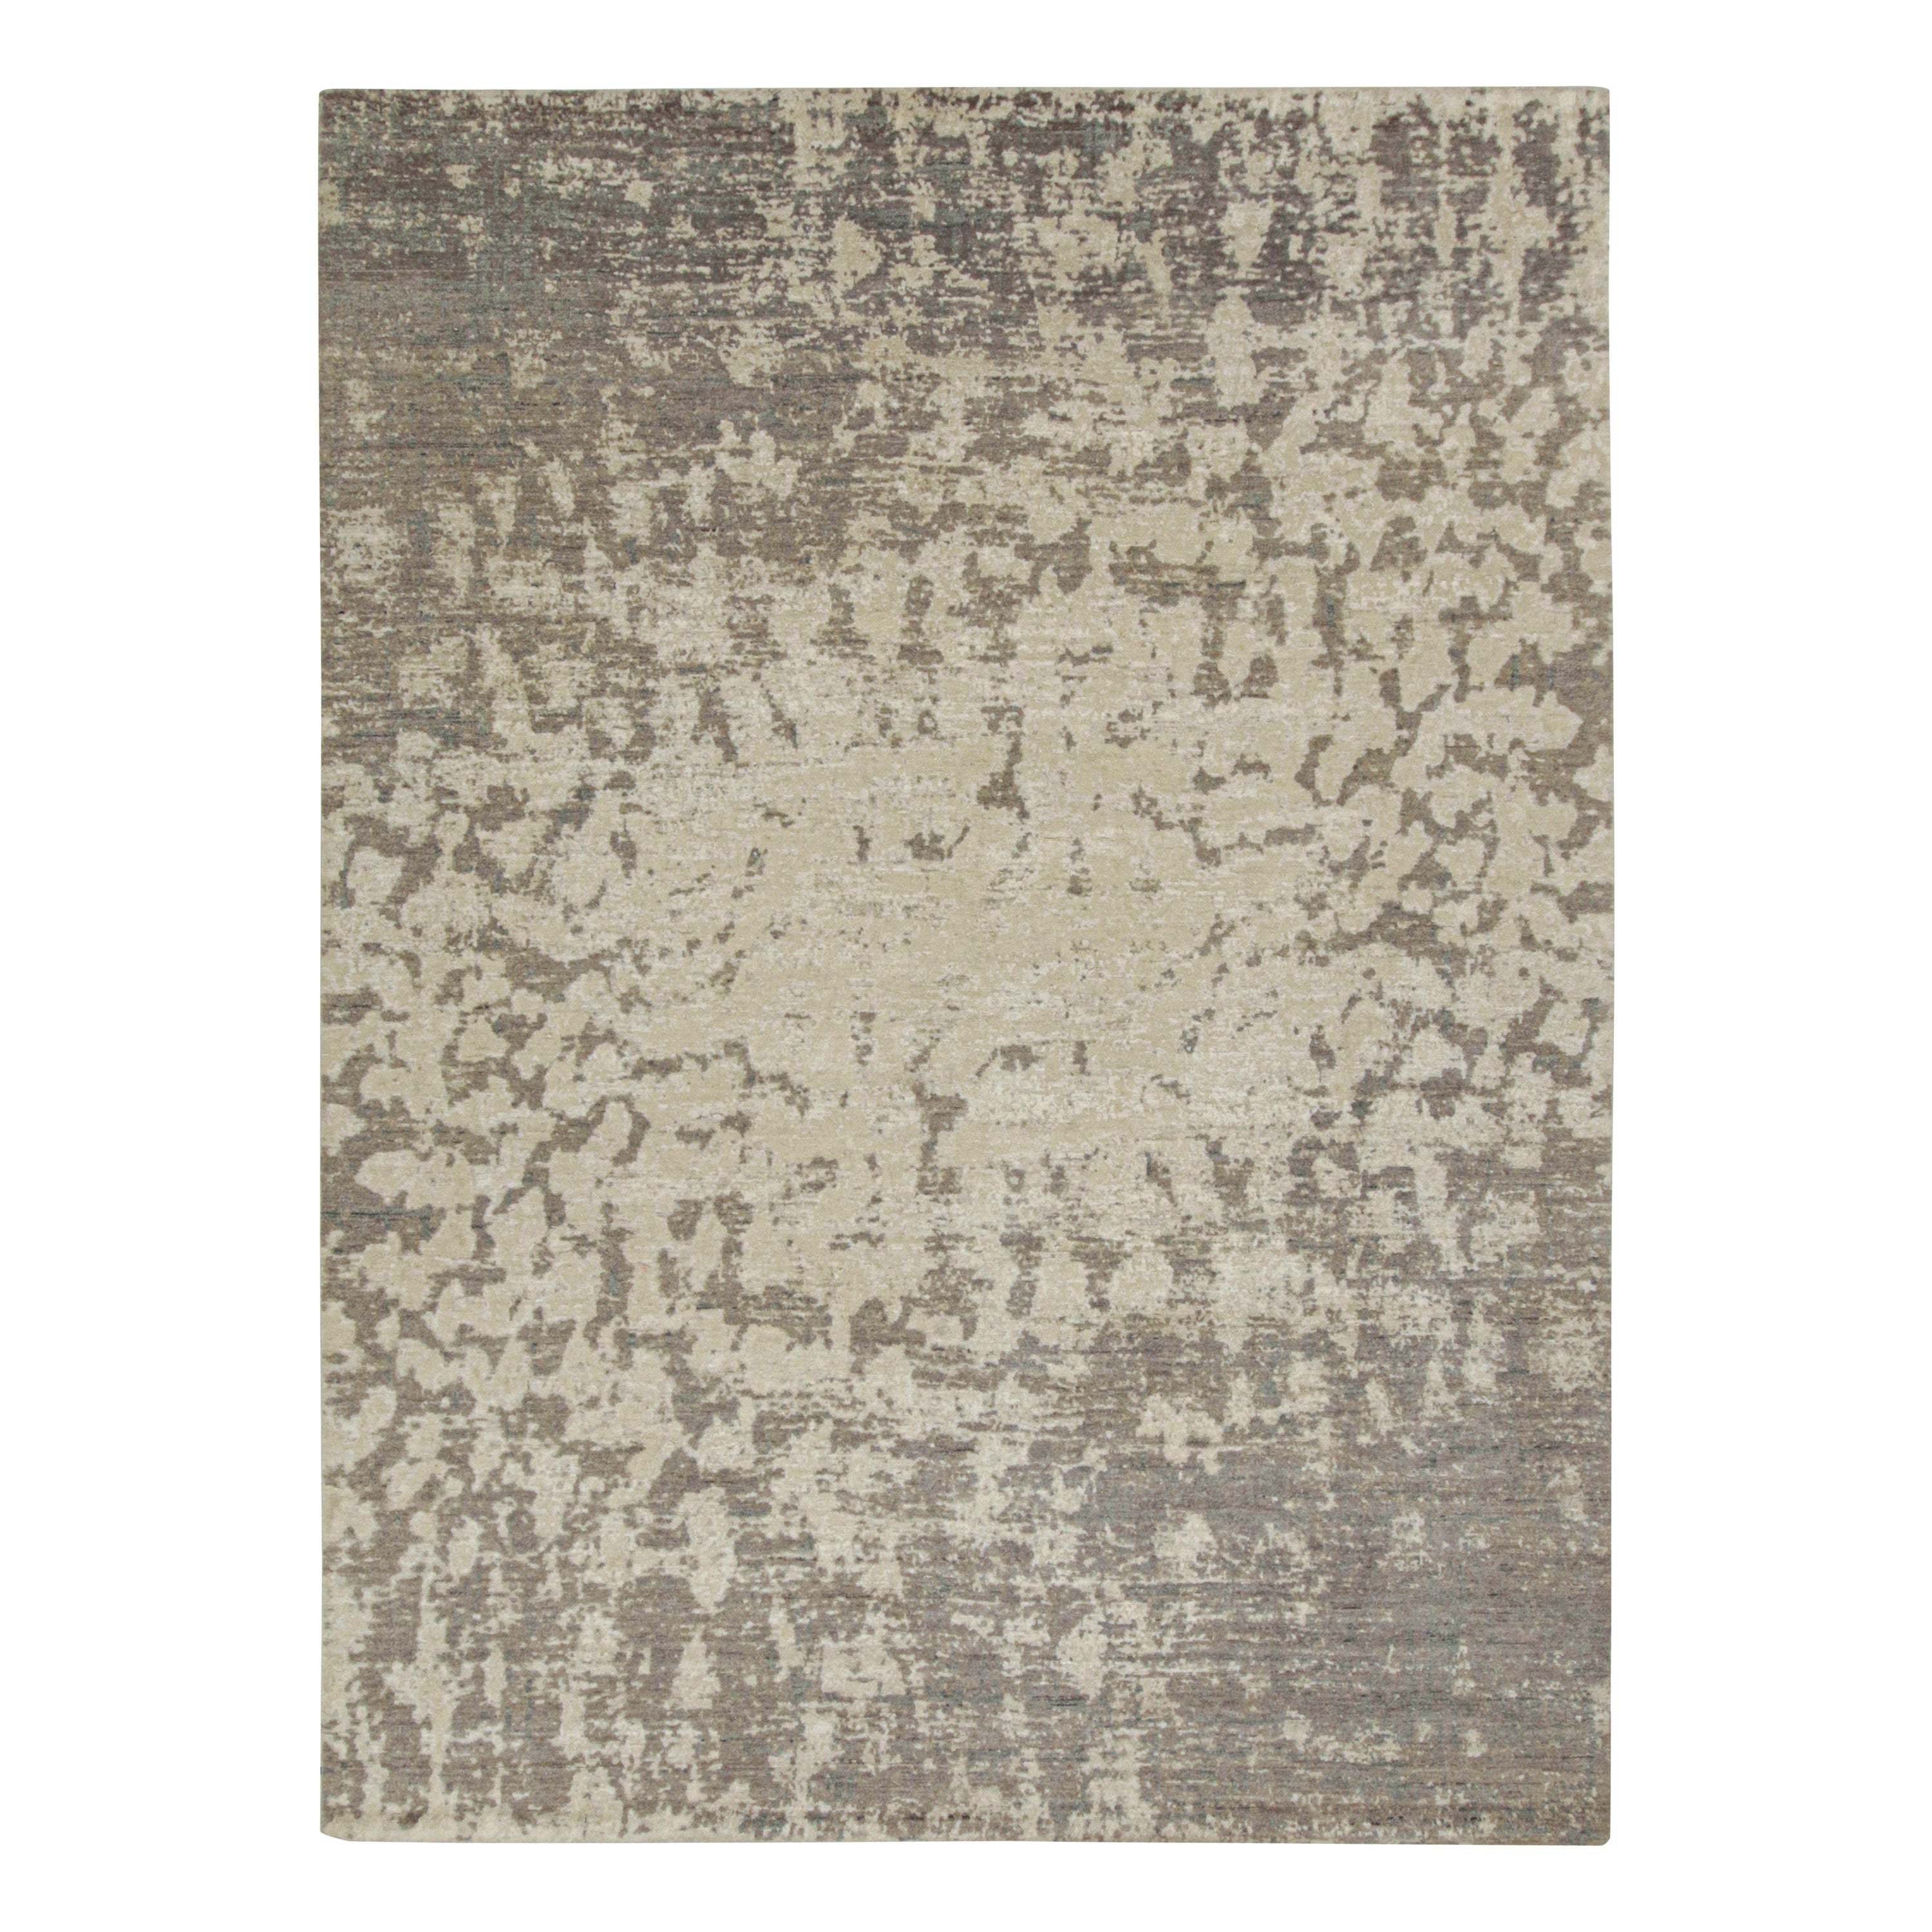 Rug & Kilim's Modern Abstract Rug in Beige-Brown and Gray Patterns (Tapis abstrait moderne à motifs beige, marron et gris) en vente